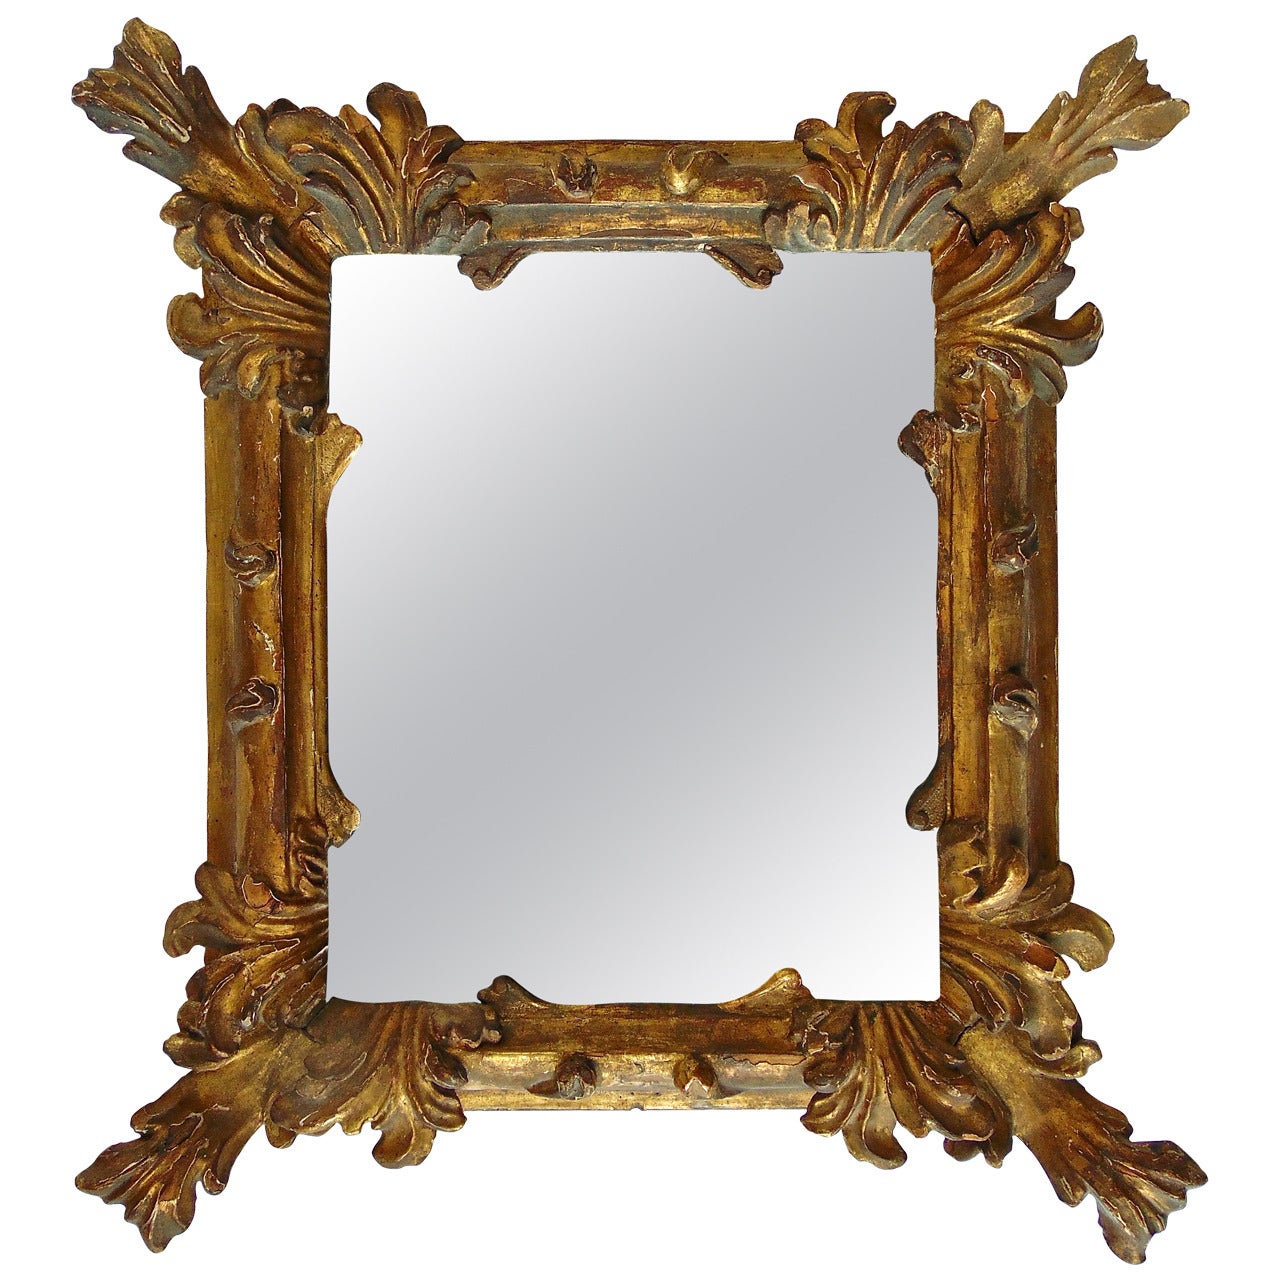 Period 18th Century Italian Baroque Carved Gilt Mirror